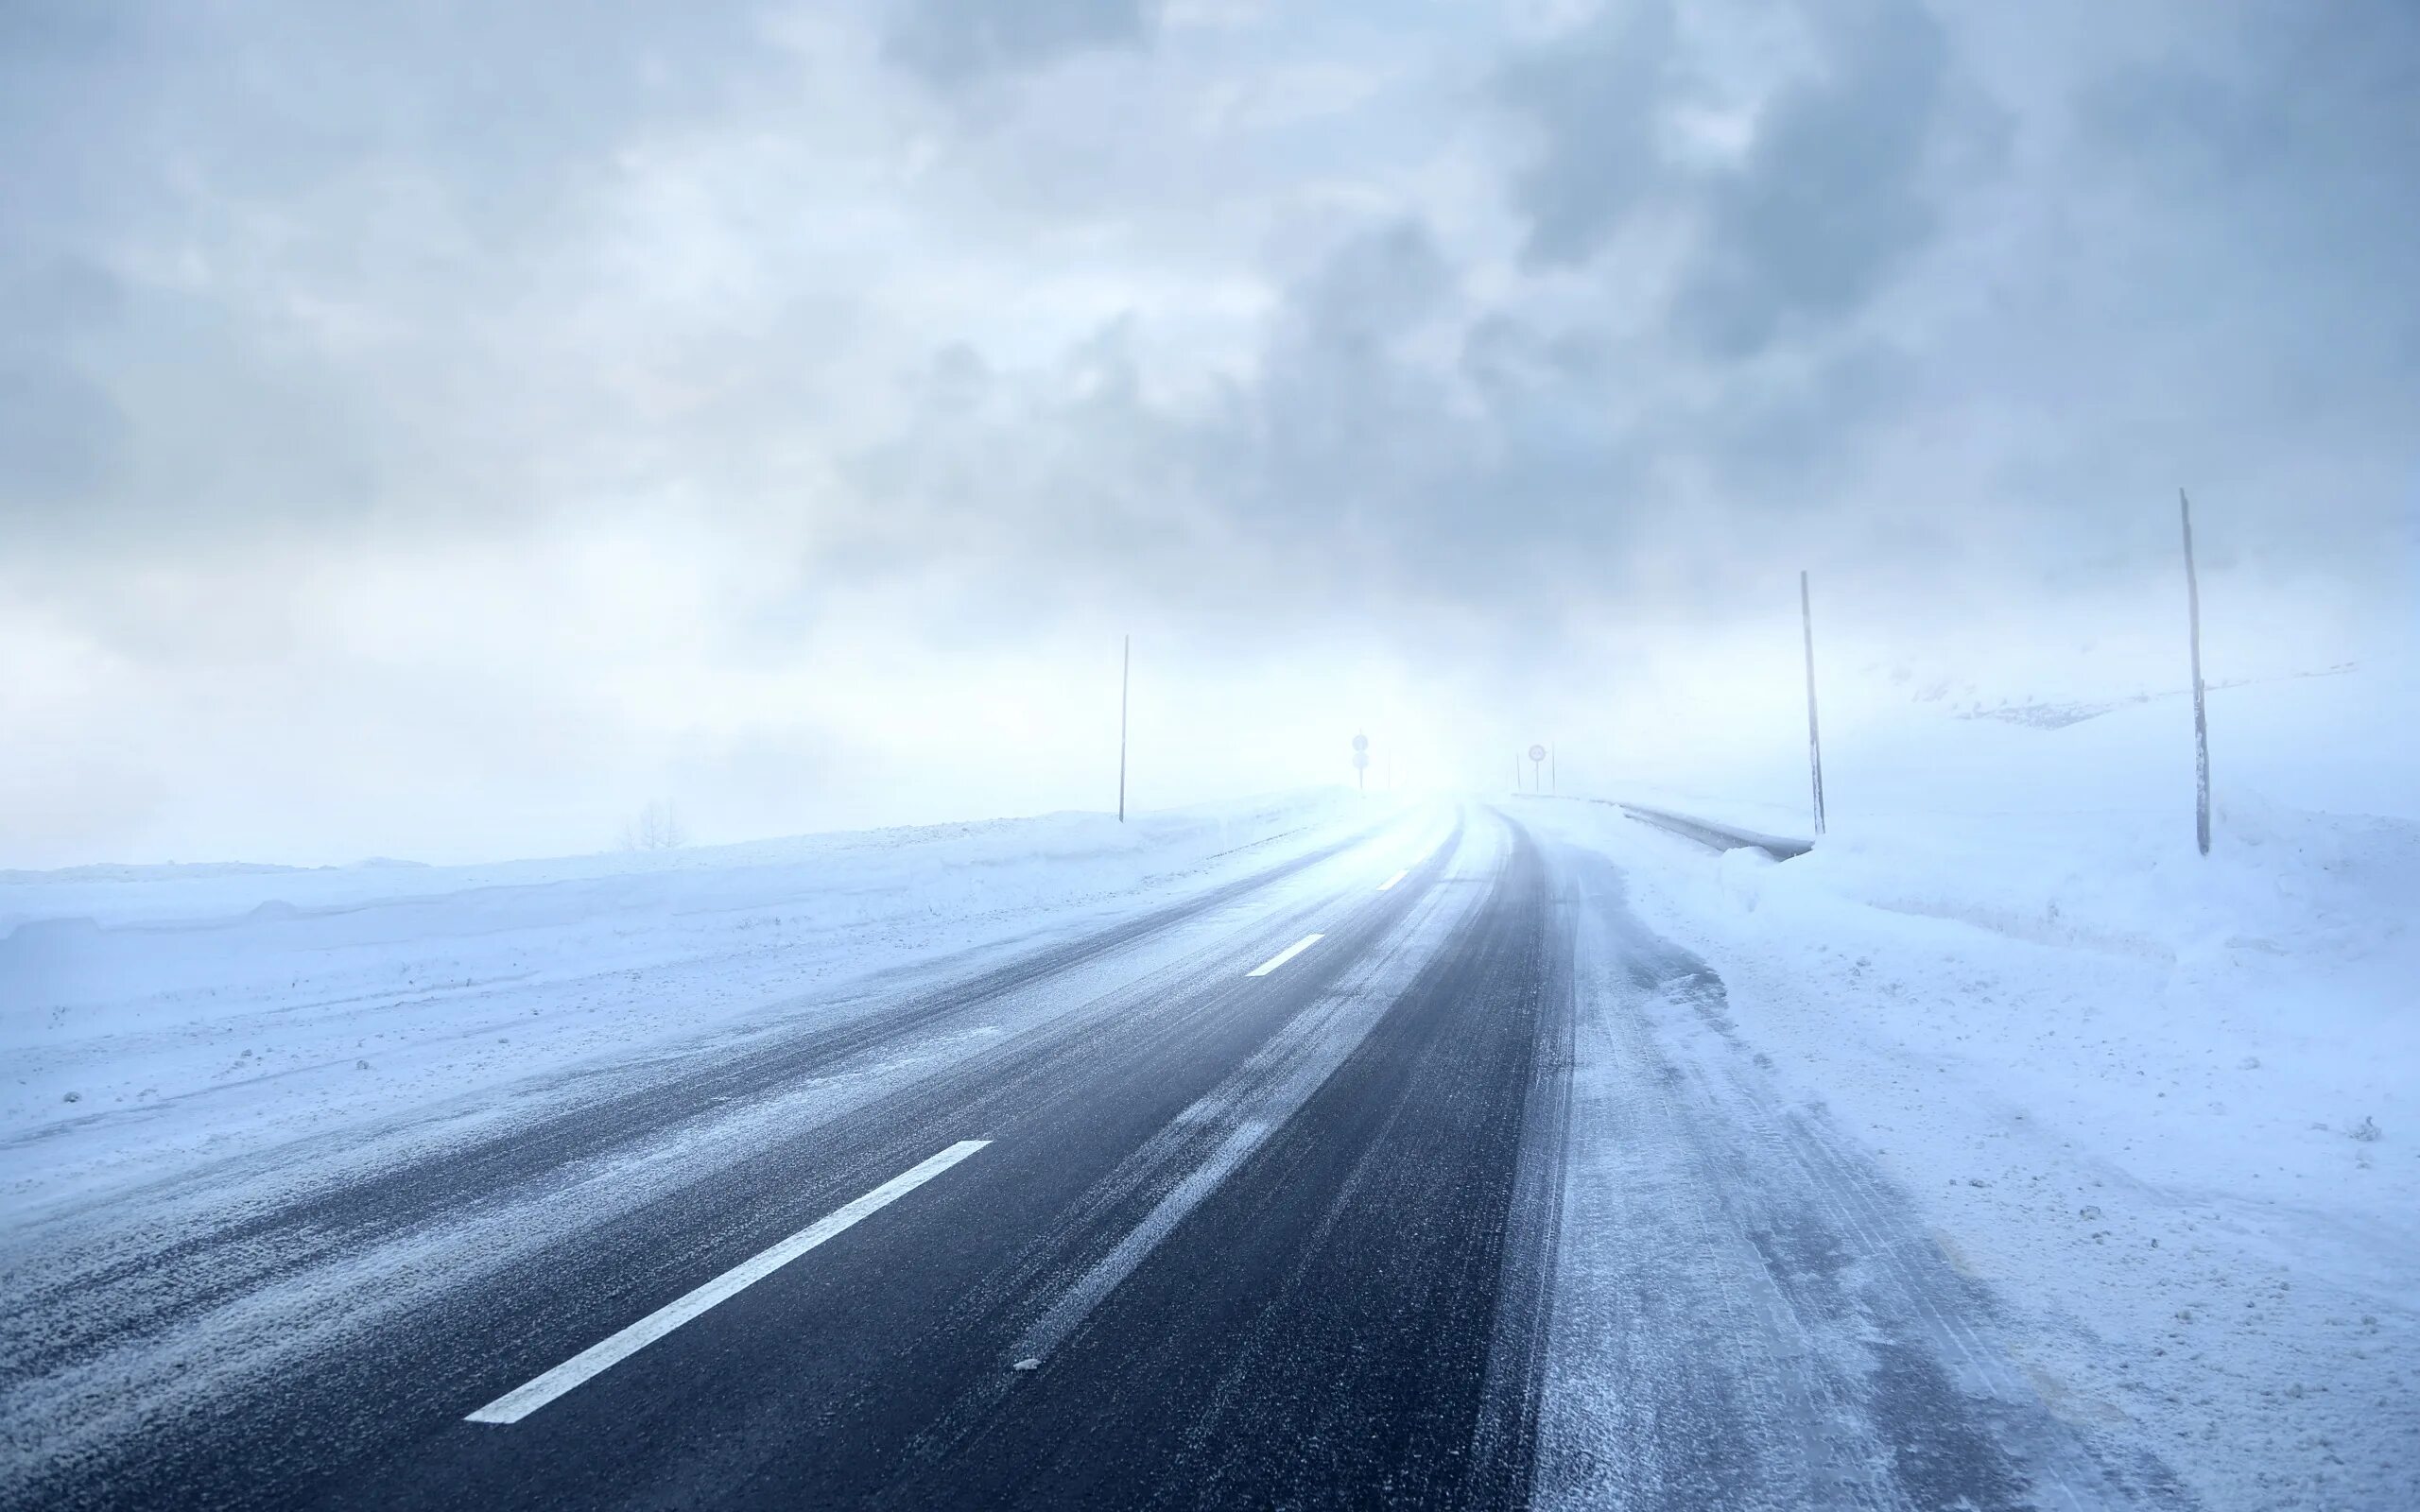 Снег на дороге. Трасса зима. Заснеженная дорога. Зимняя дорога. Сугроб сугробы туман